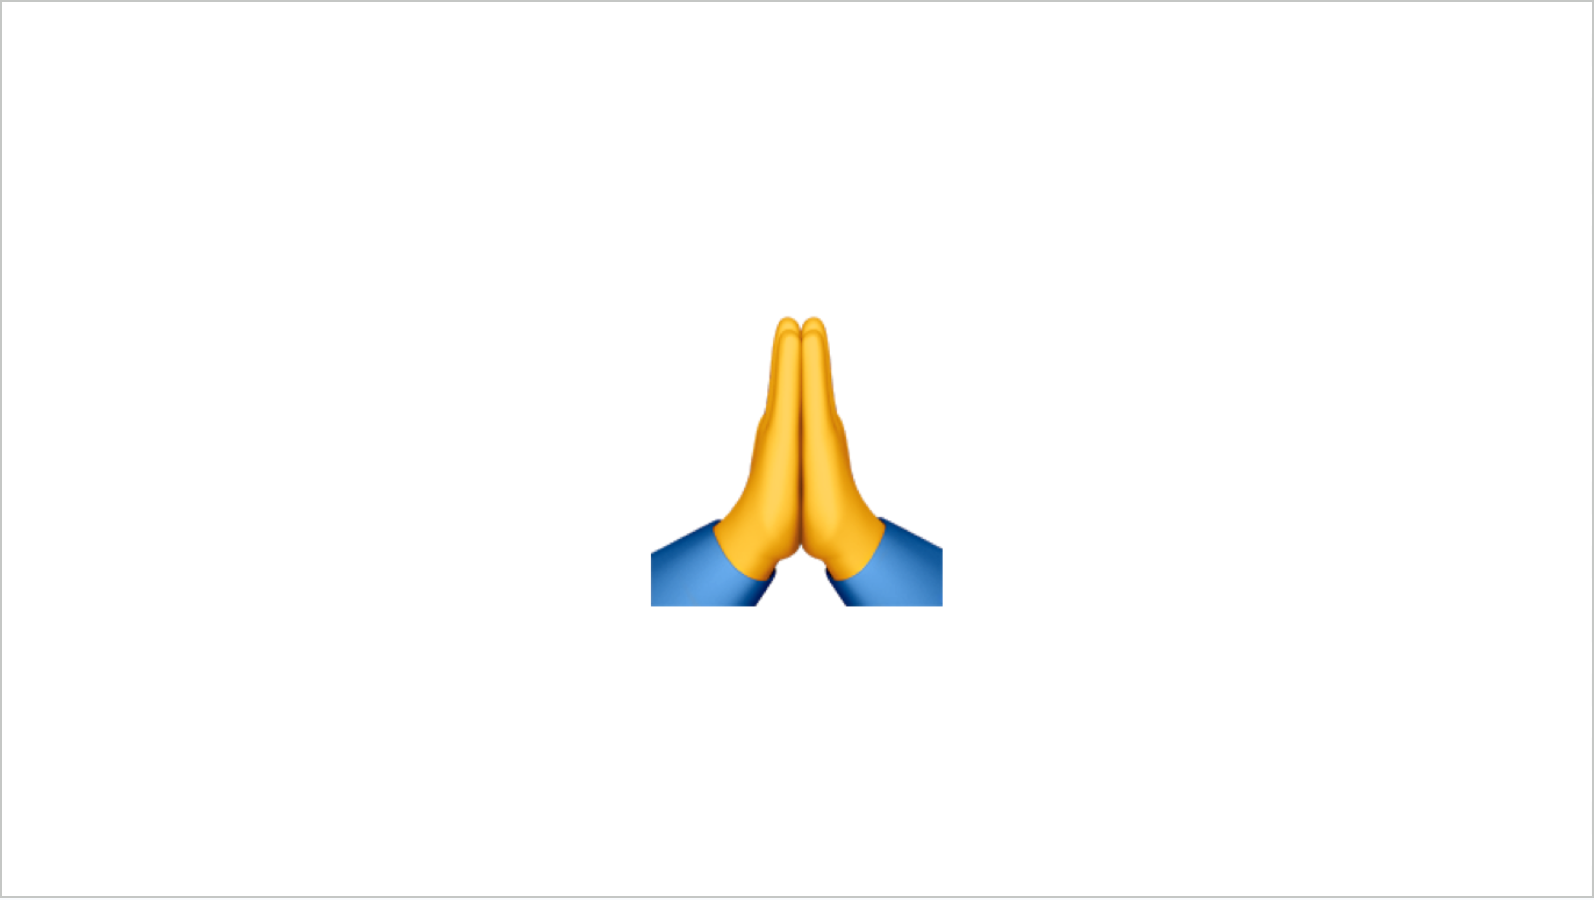 A folded hands emoji